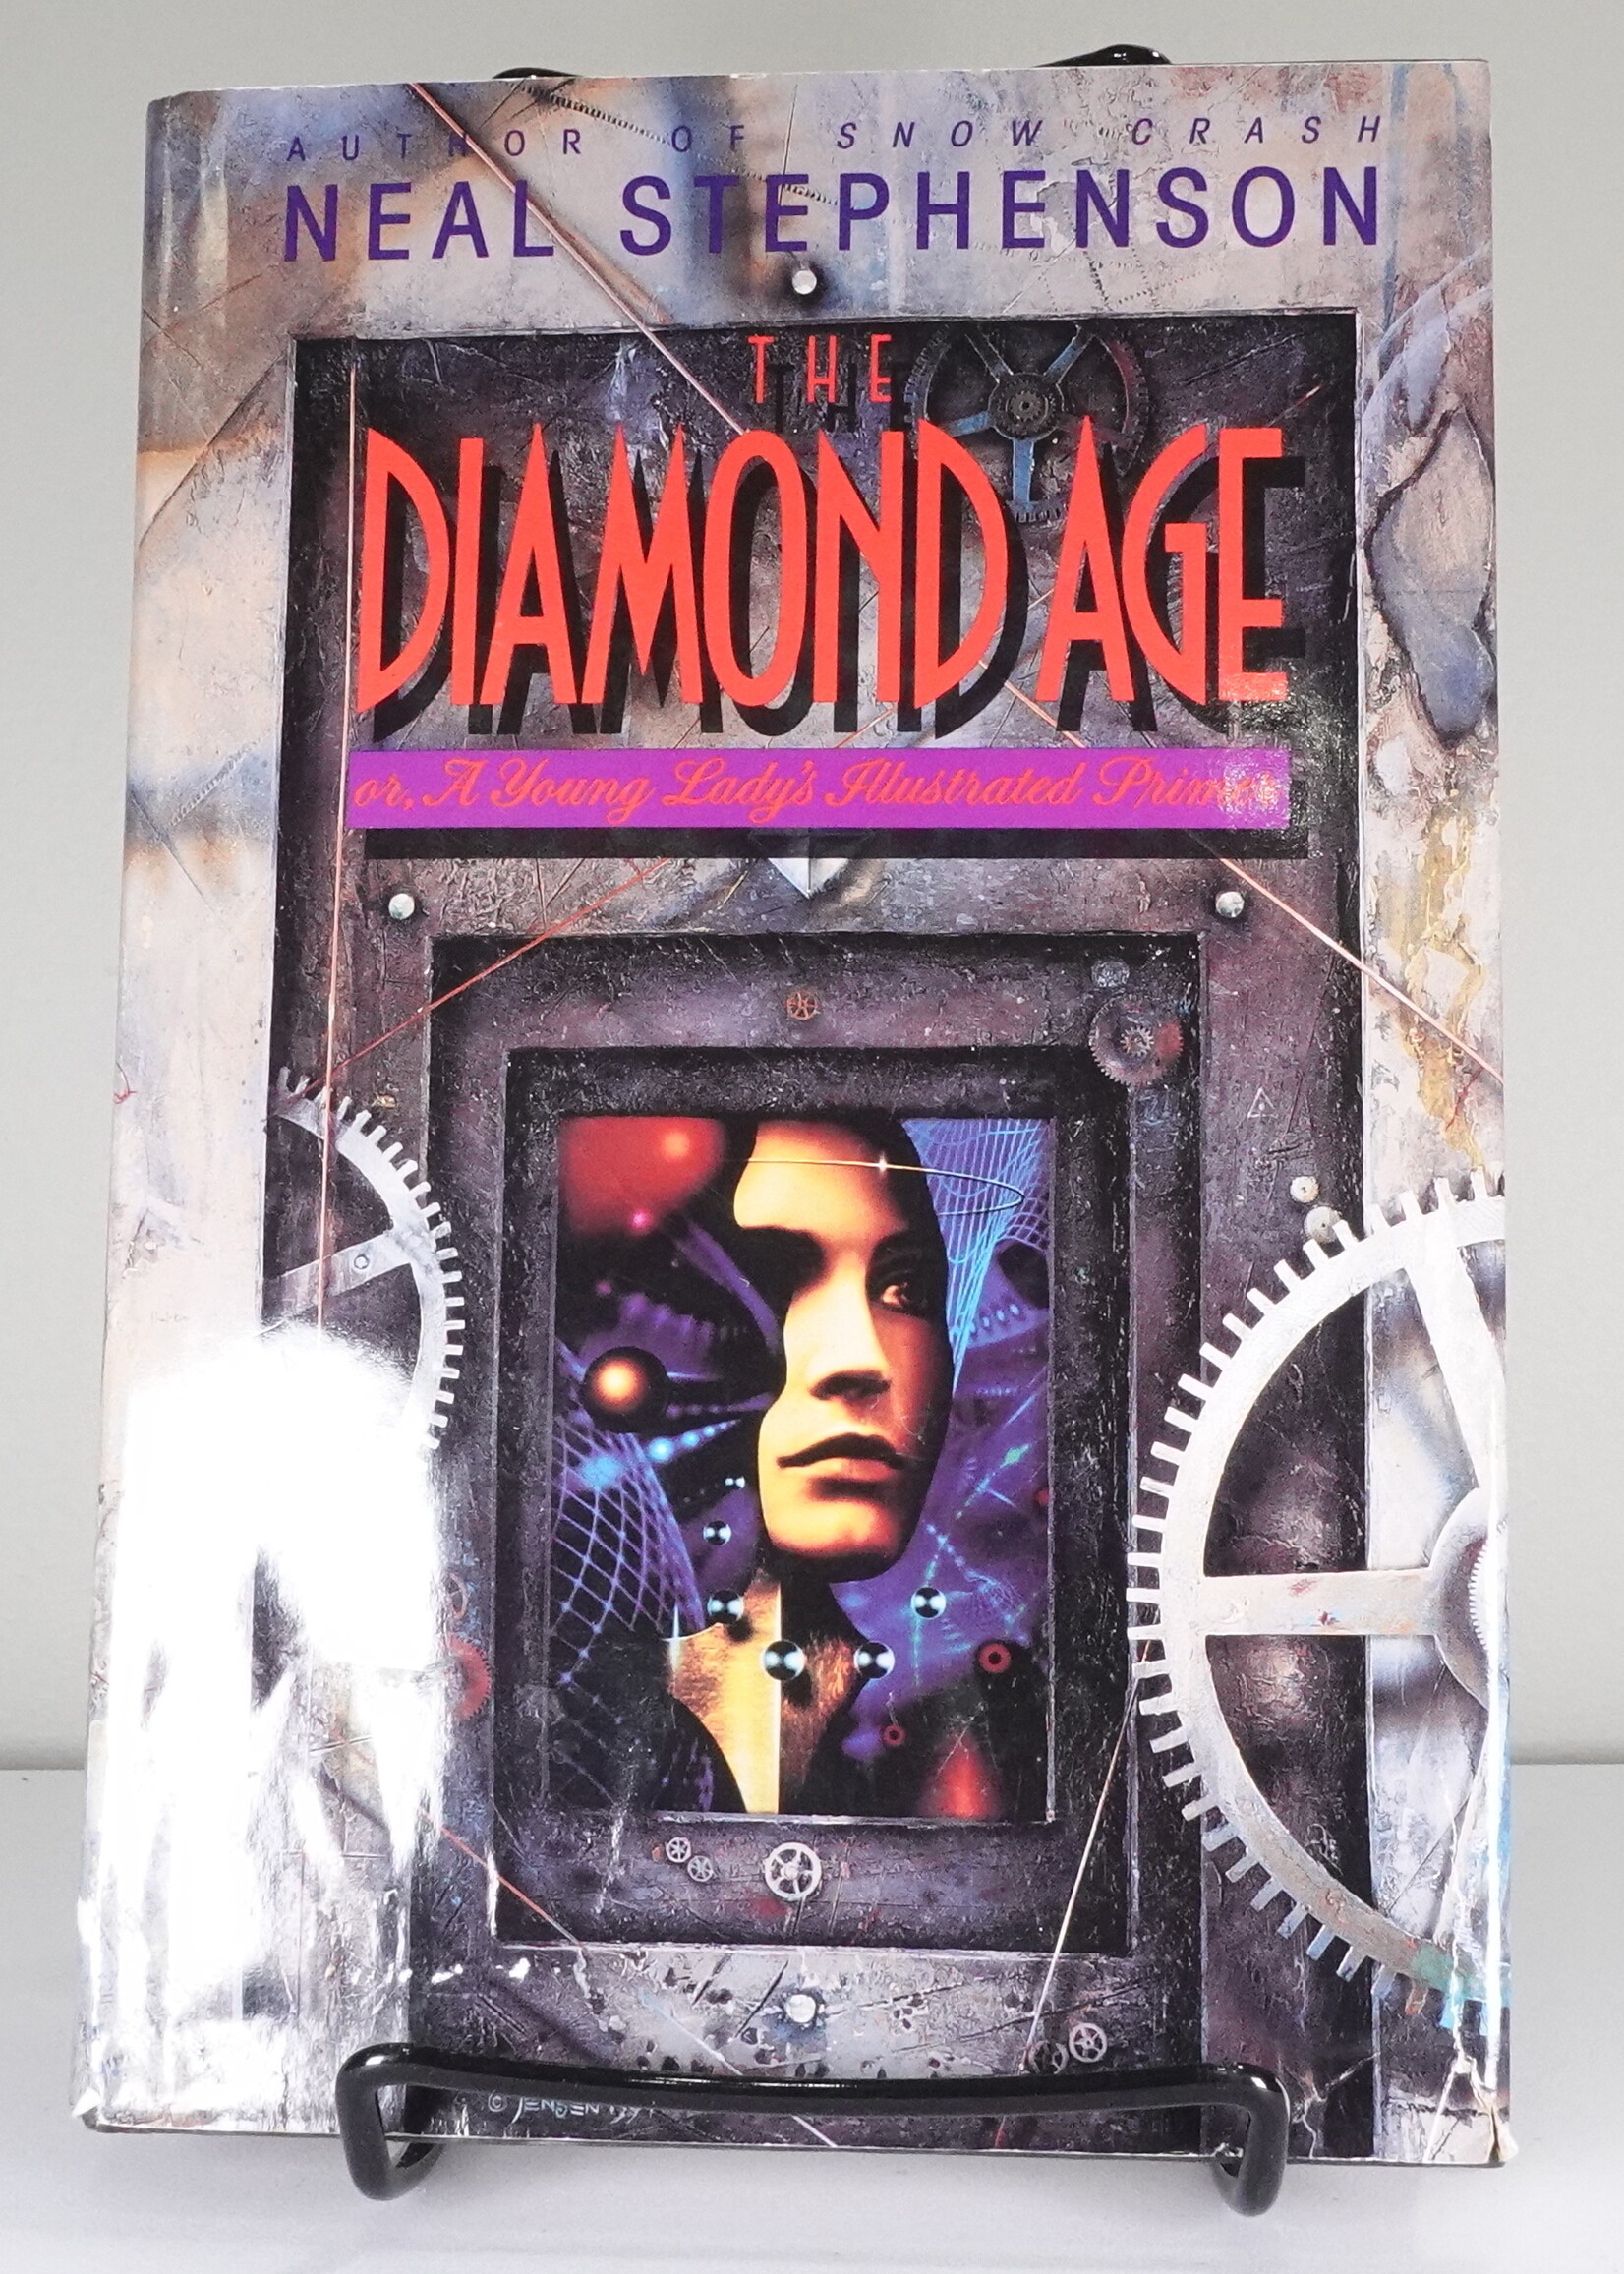 The Diamond Age